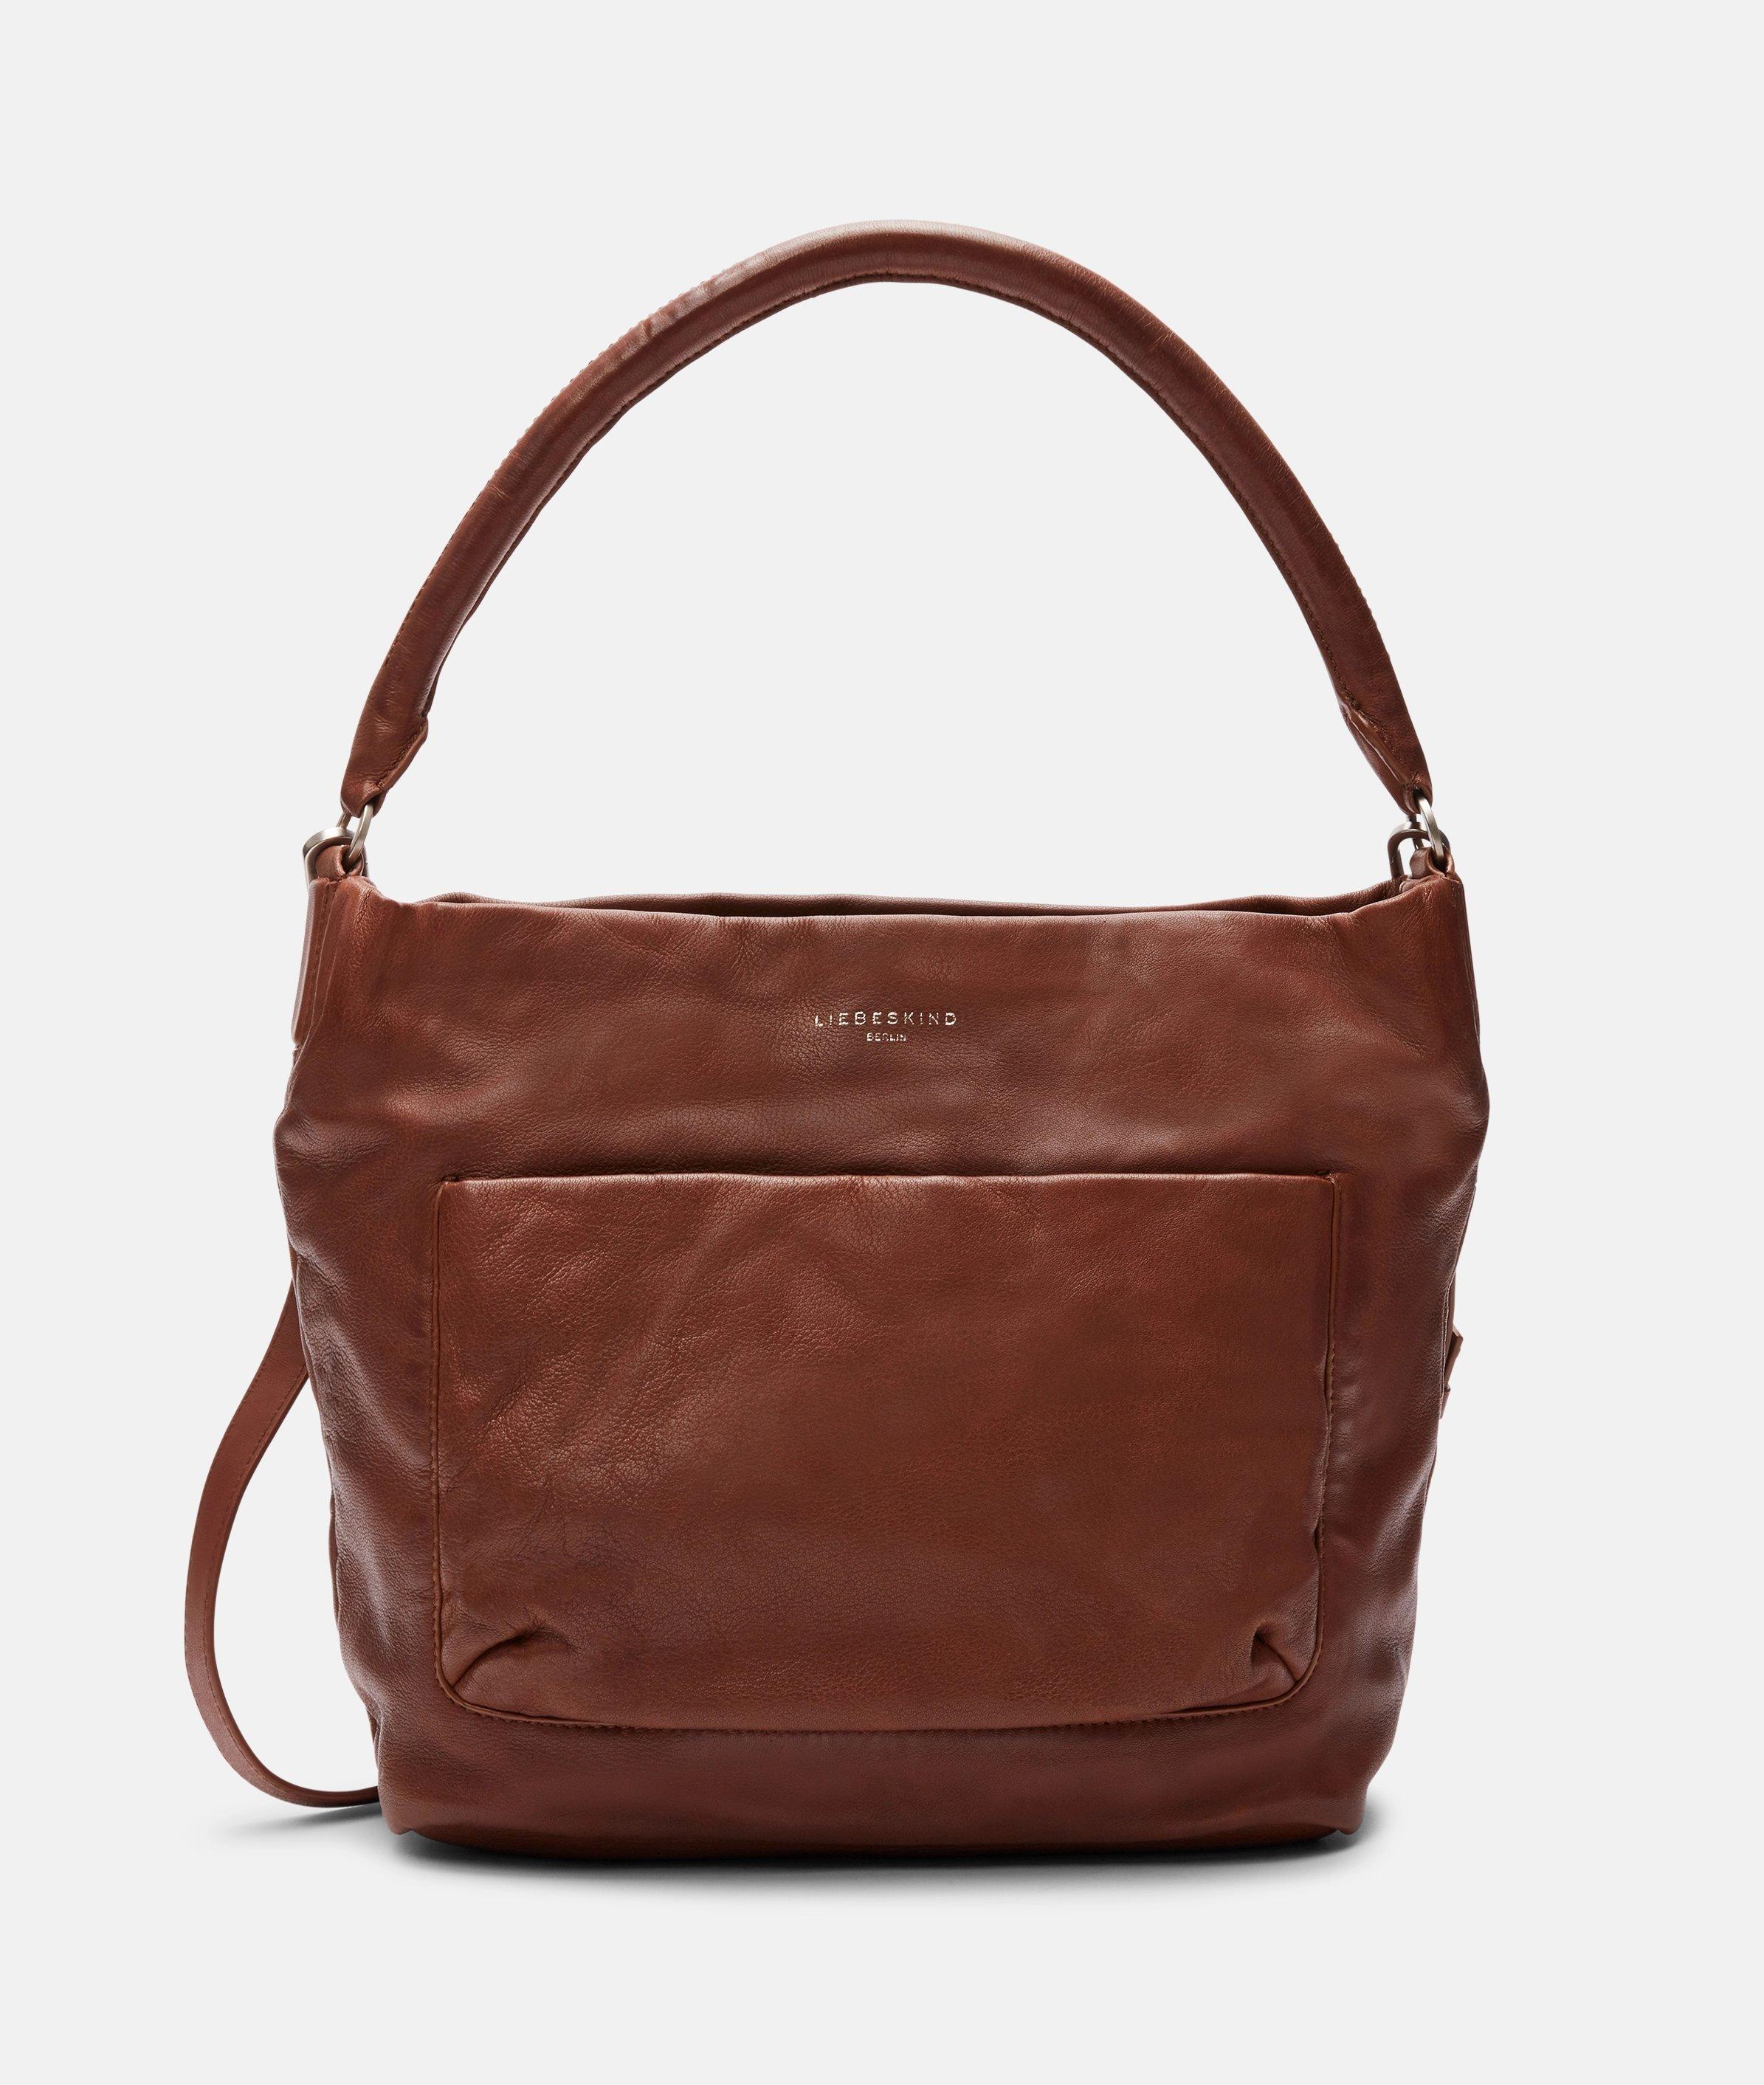 Leather handbags | Liebeskind Berlin